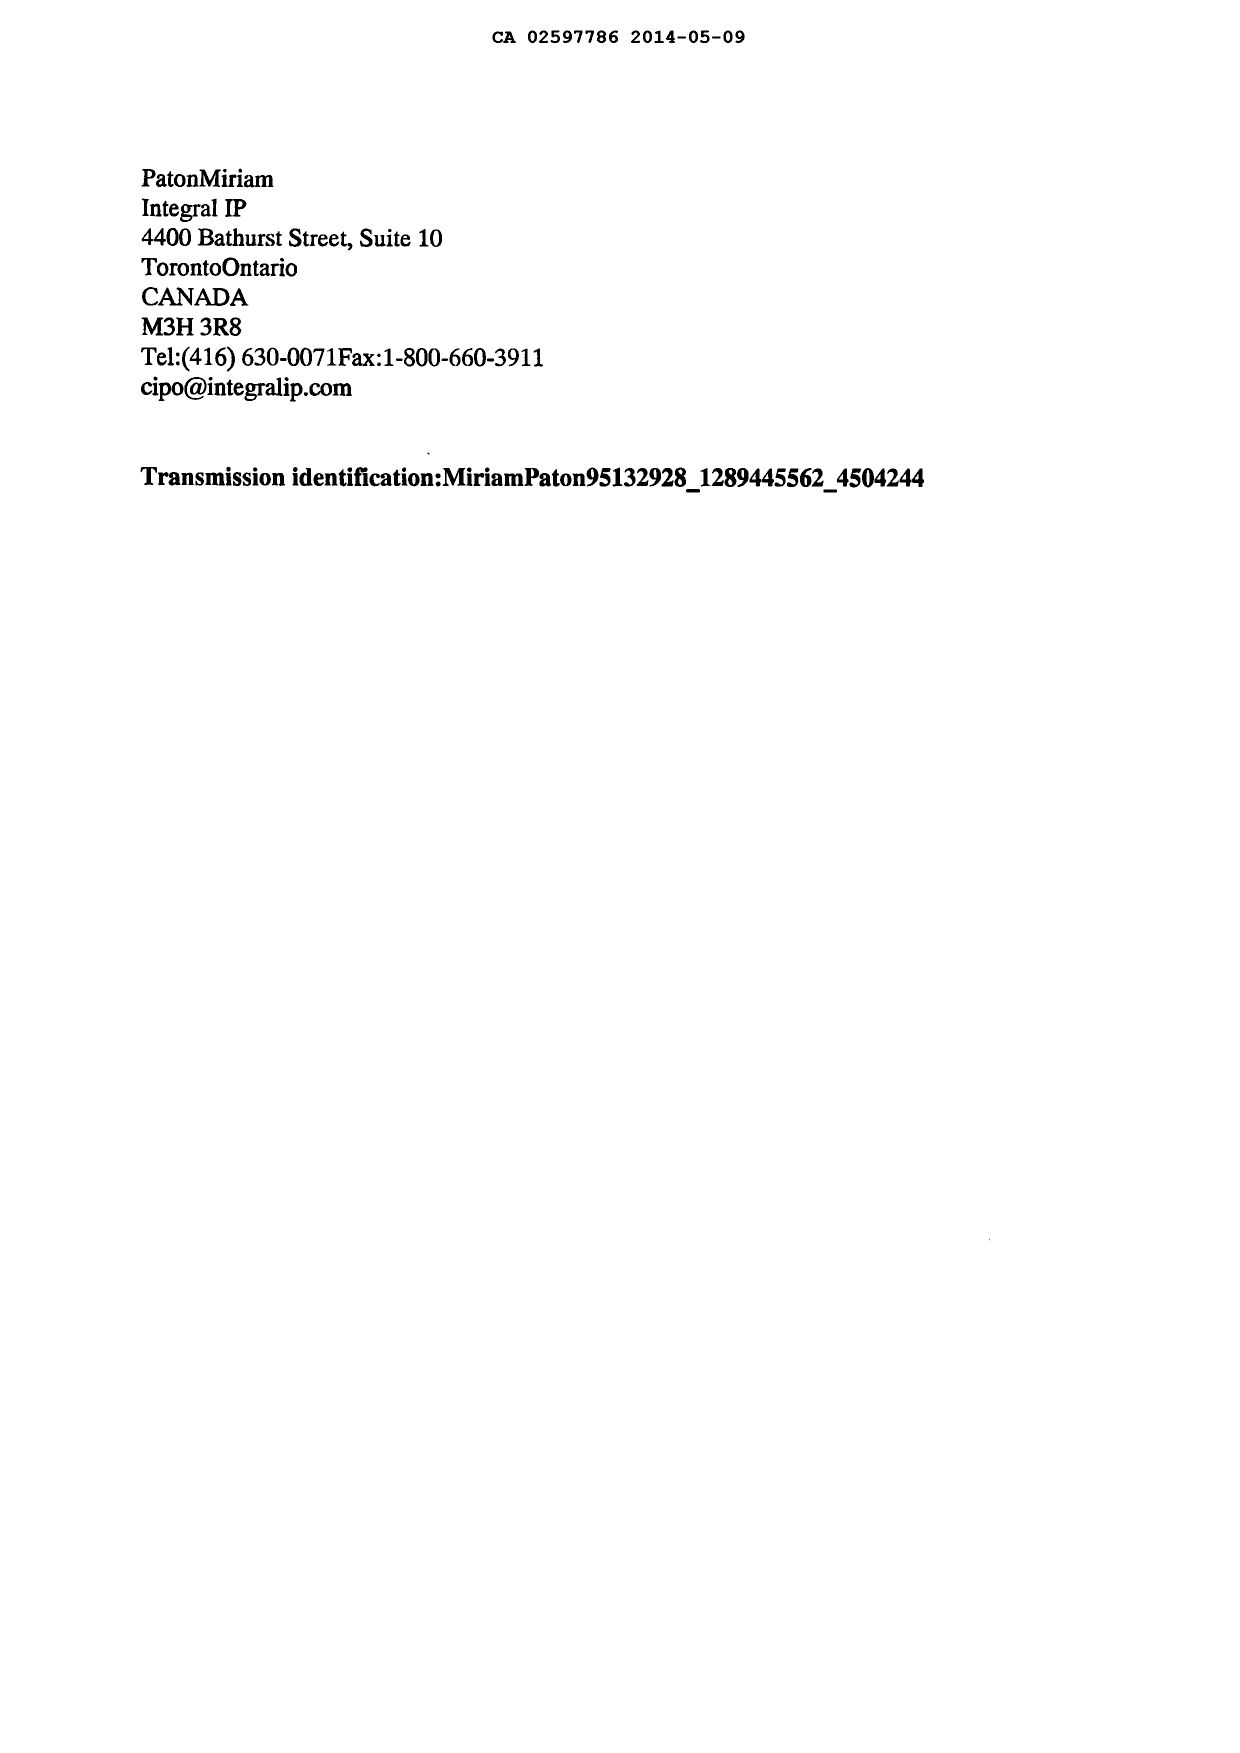 Canadian Patent Document 2597786. Correspondence 20131209. Image 2 of 2